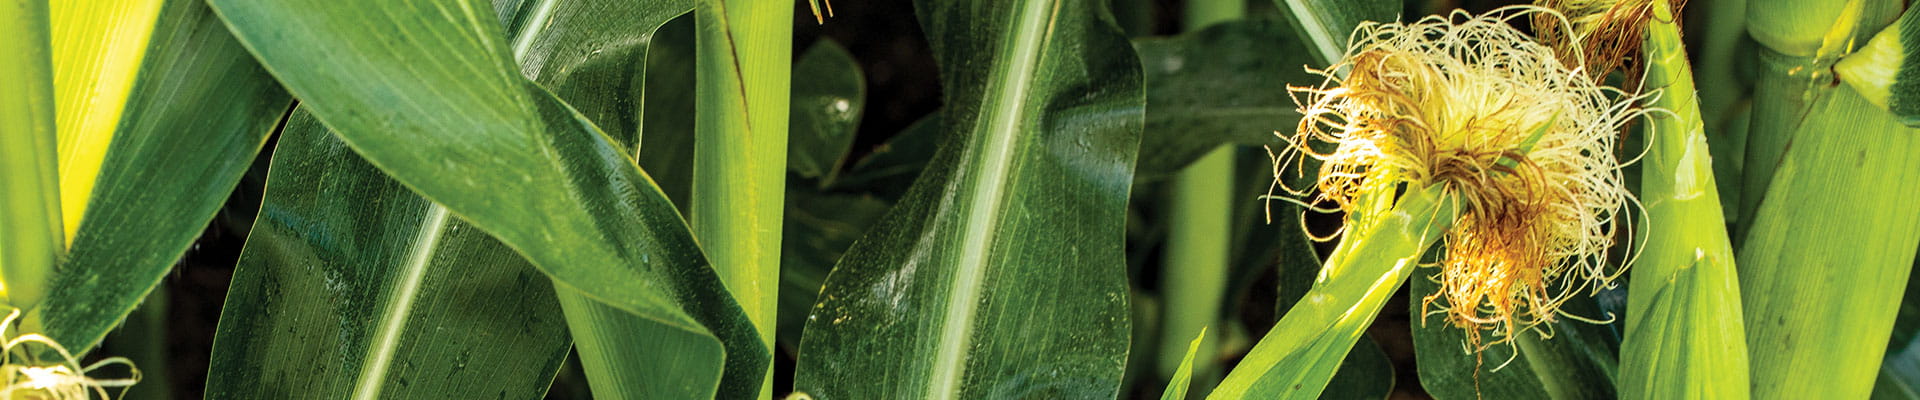 Corn crop with corn silk